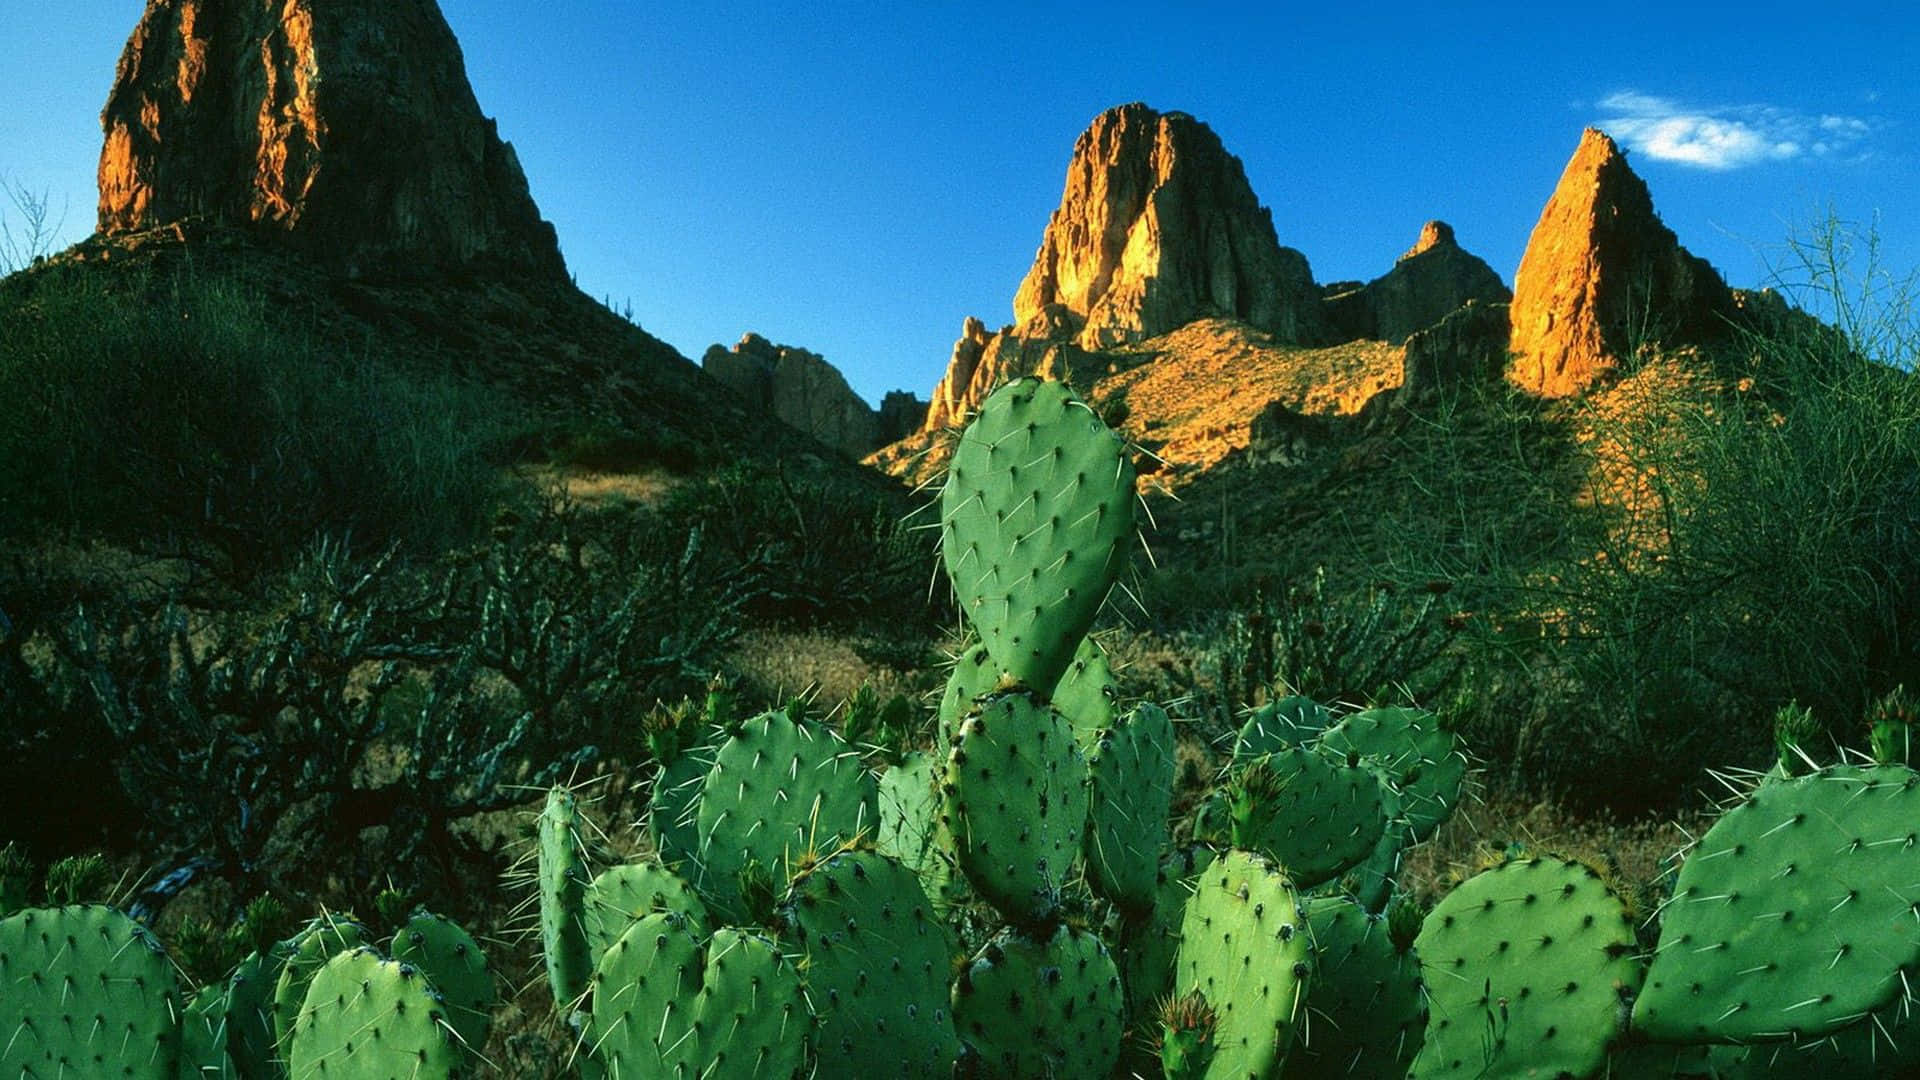 Bildeiner Nopal-kaktus-feigen-berg-landschaft.